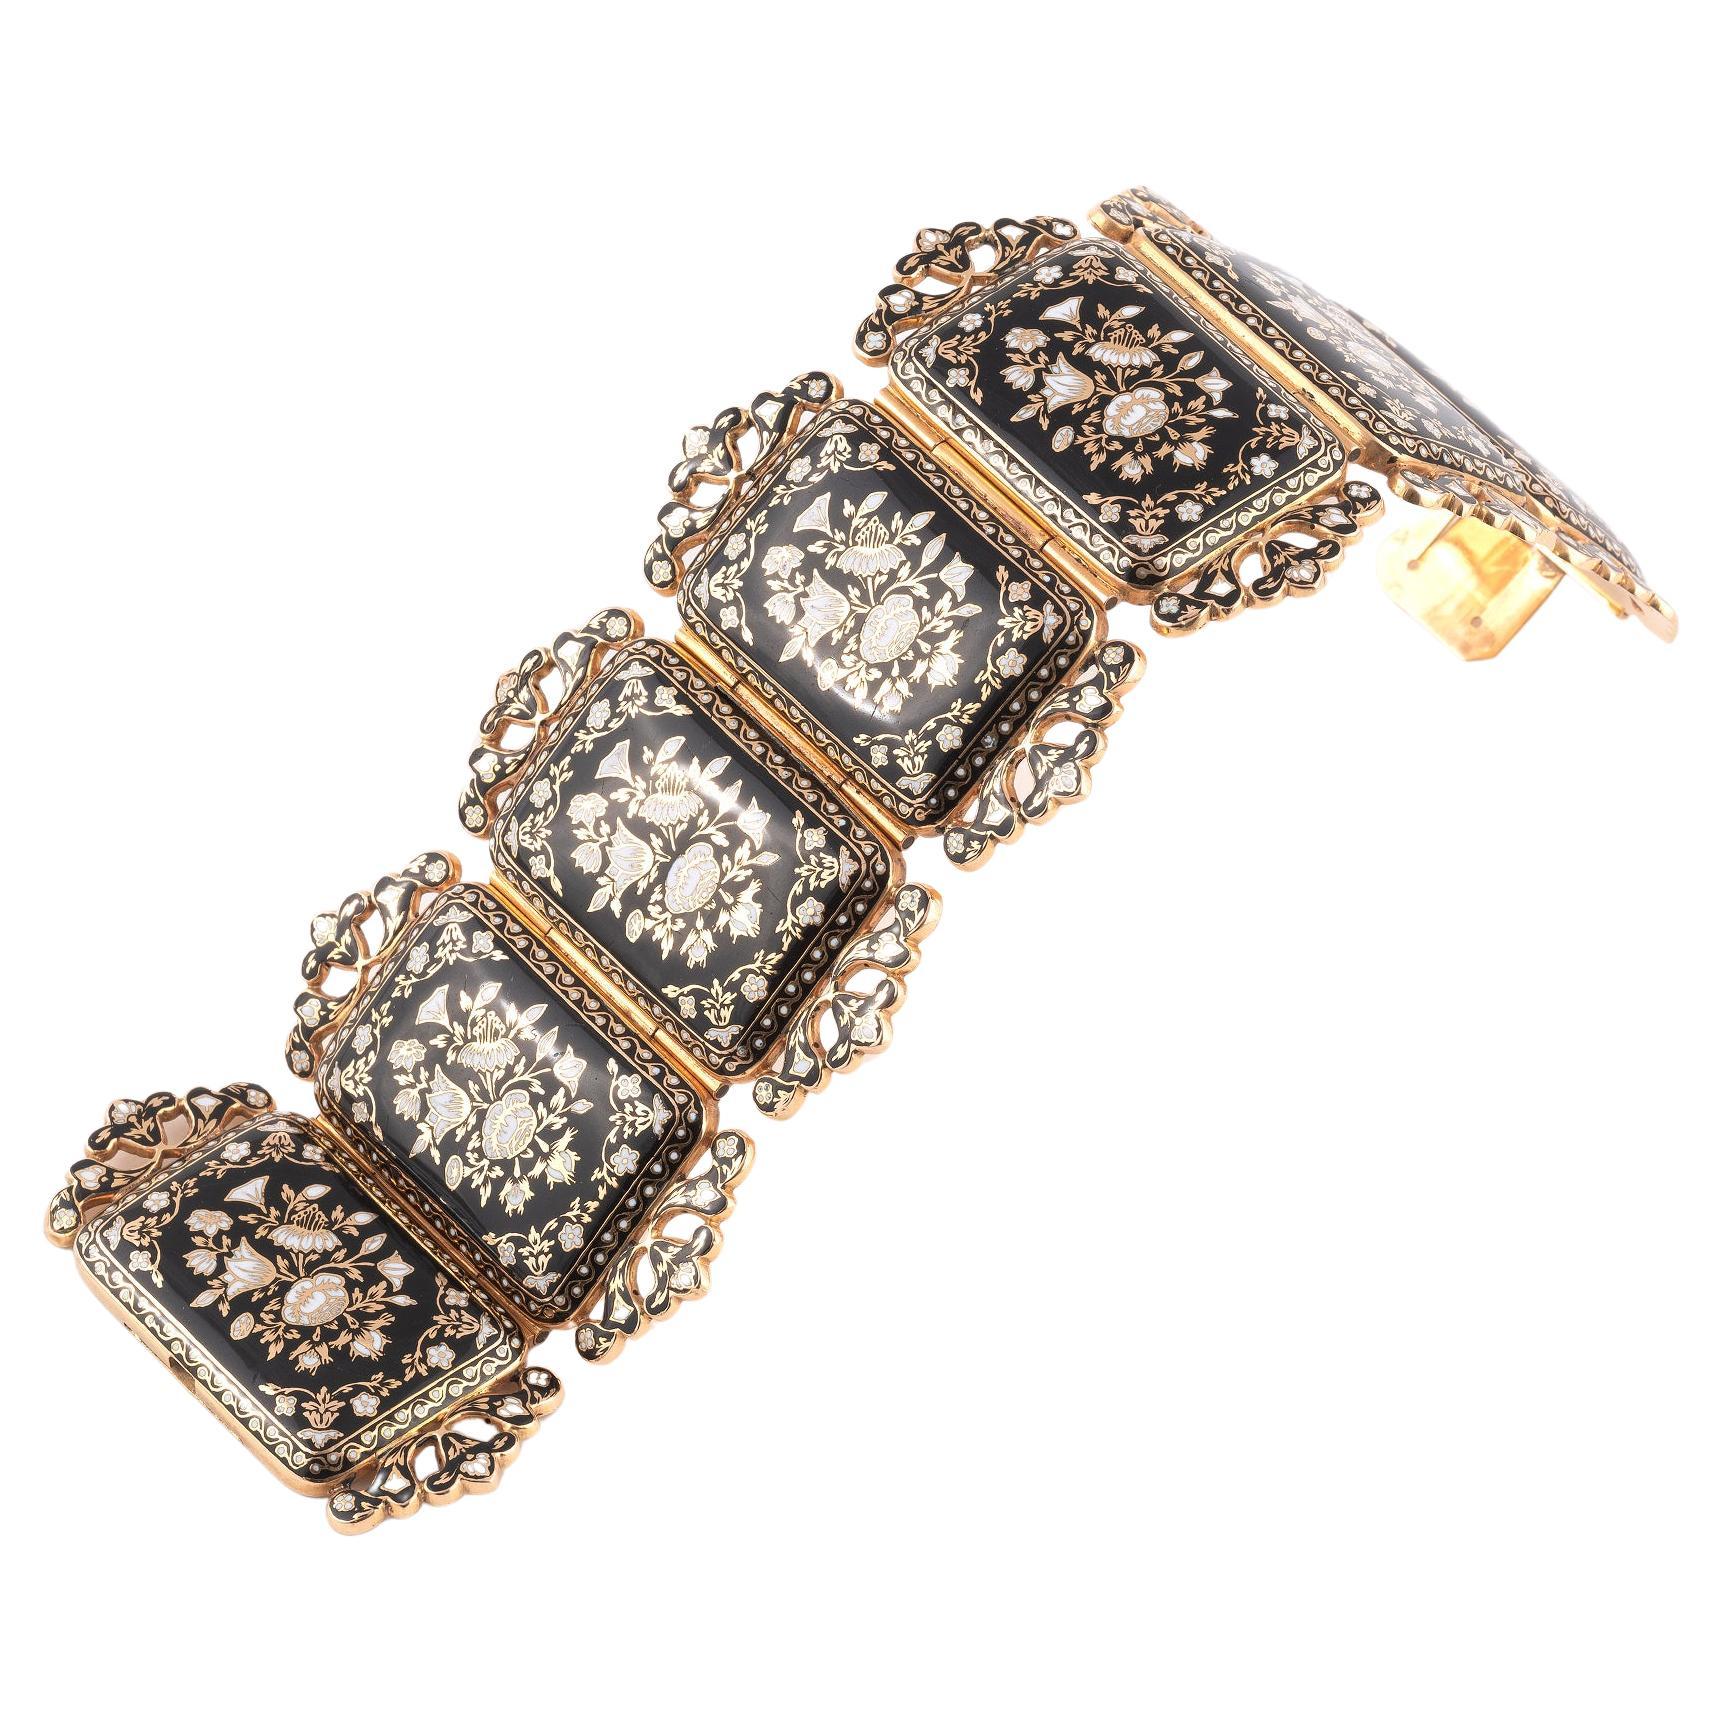 Antique Swiss Gold And Enamel Bracelet Circa 1840 For Sale